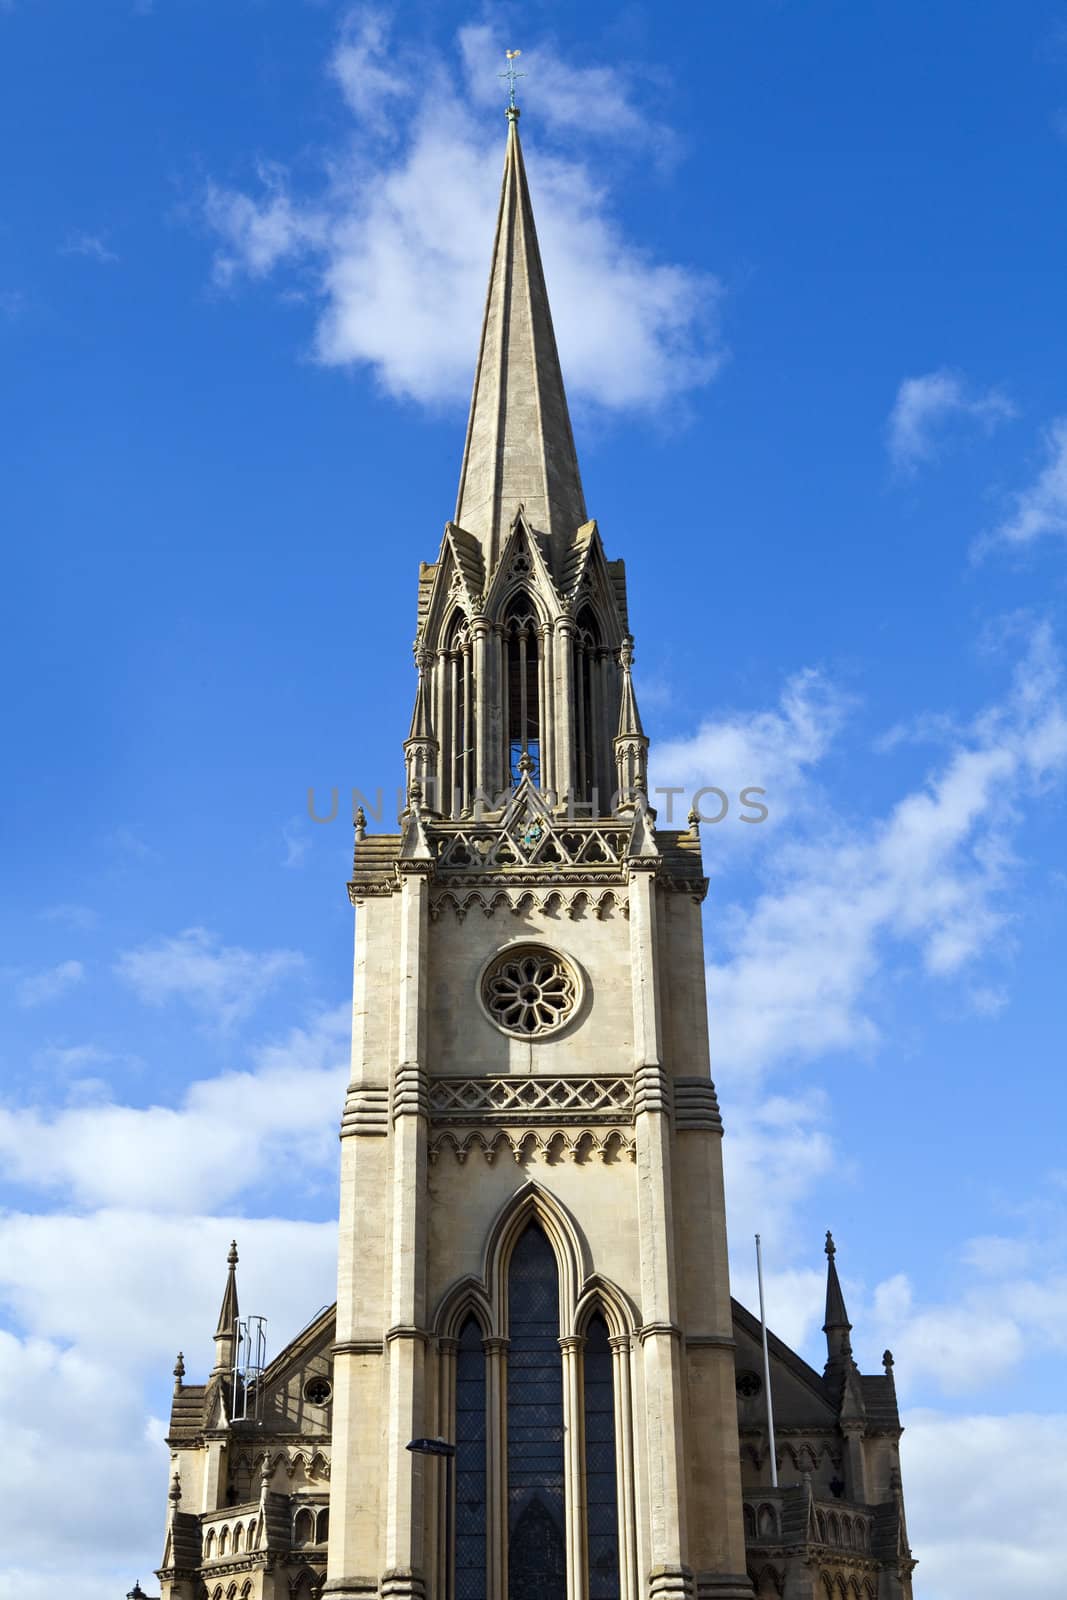 St. Michael's Church in Bath by chrisdorney